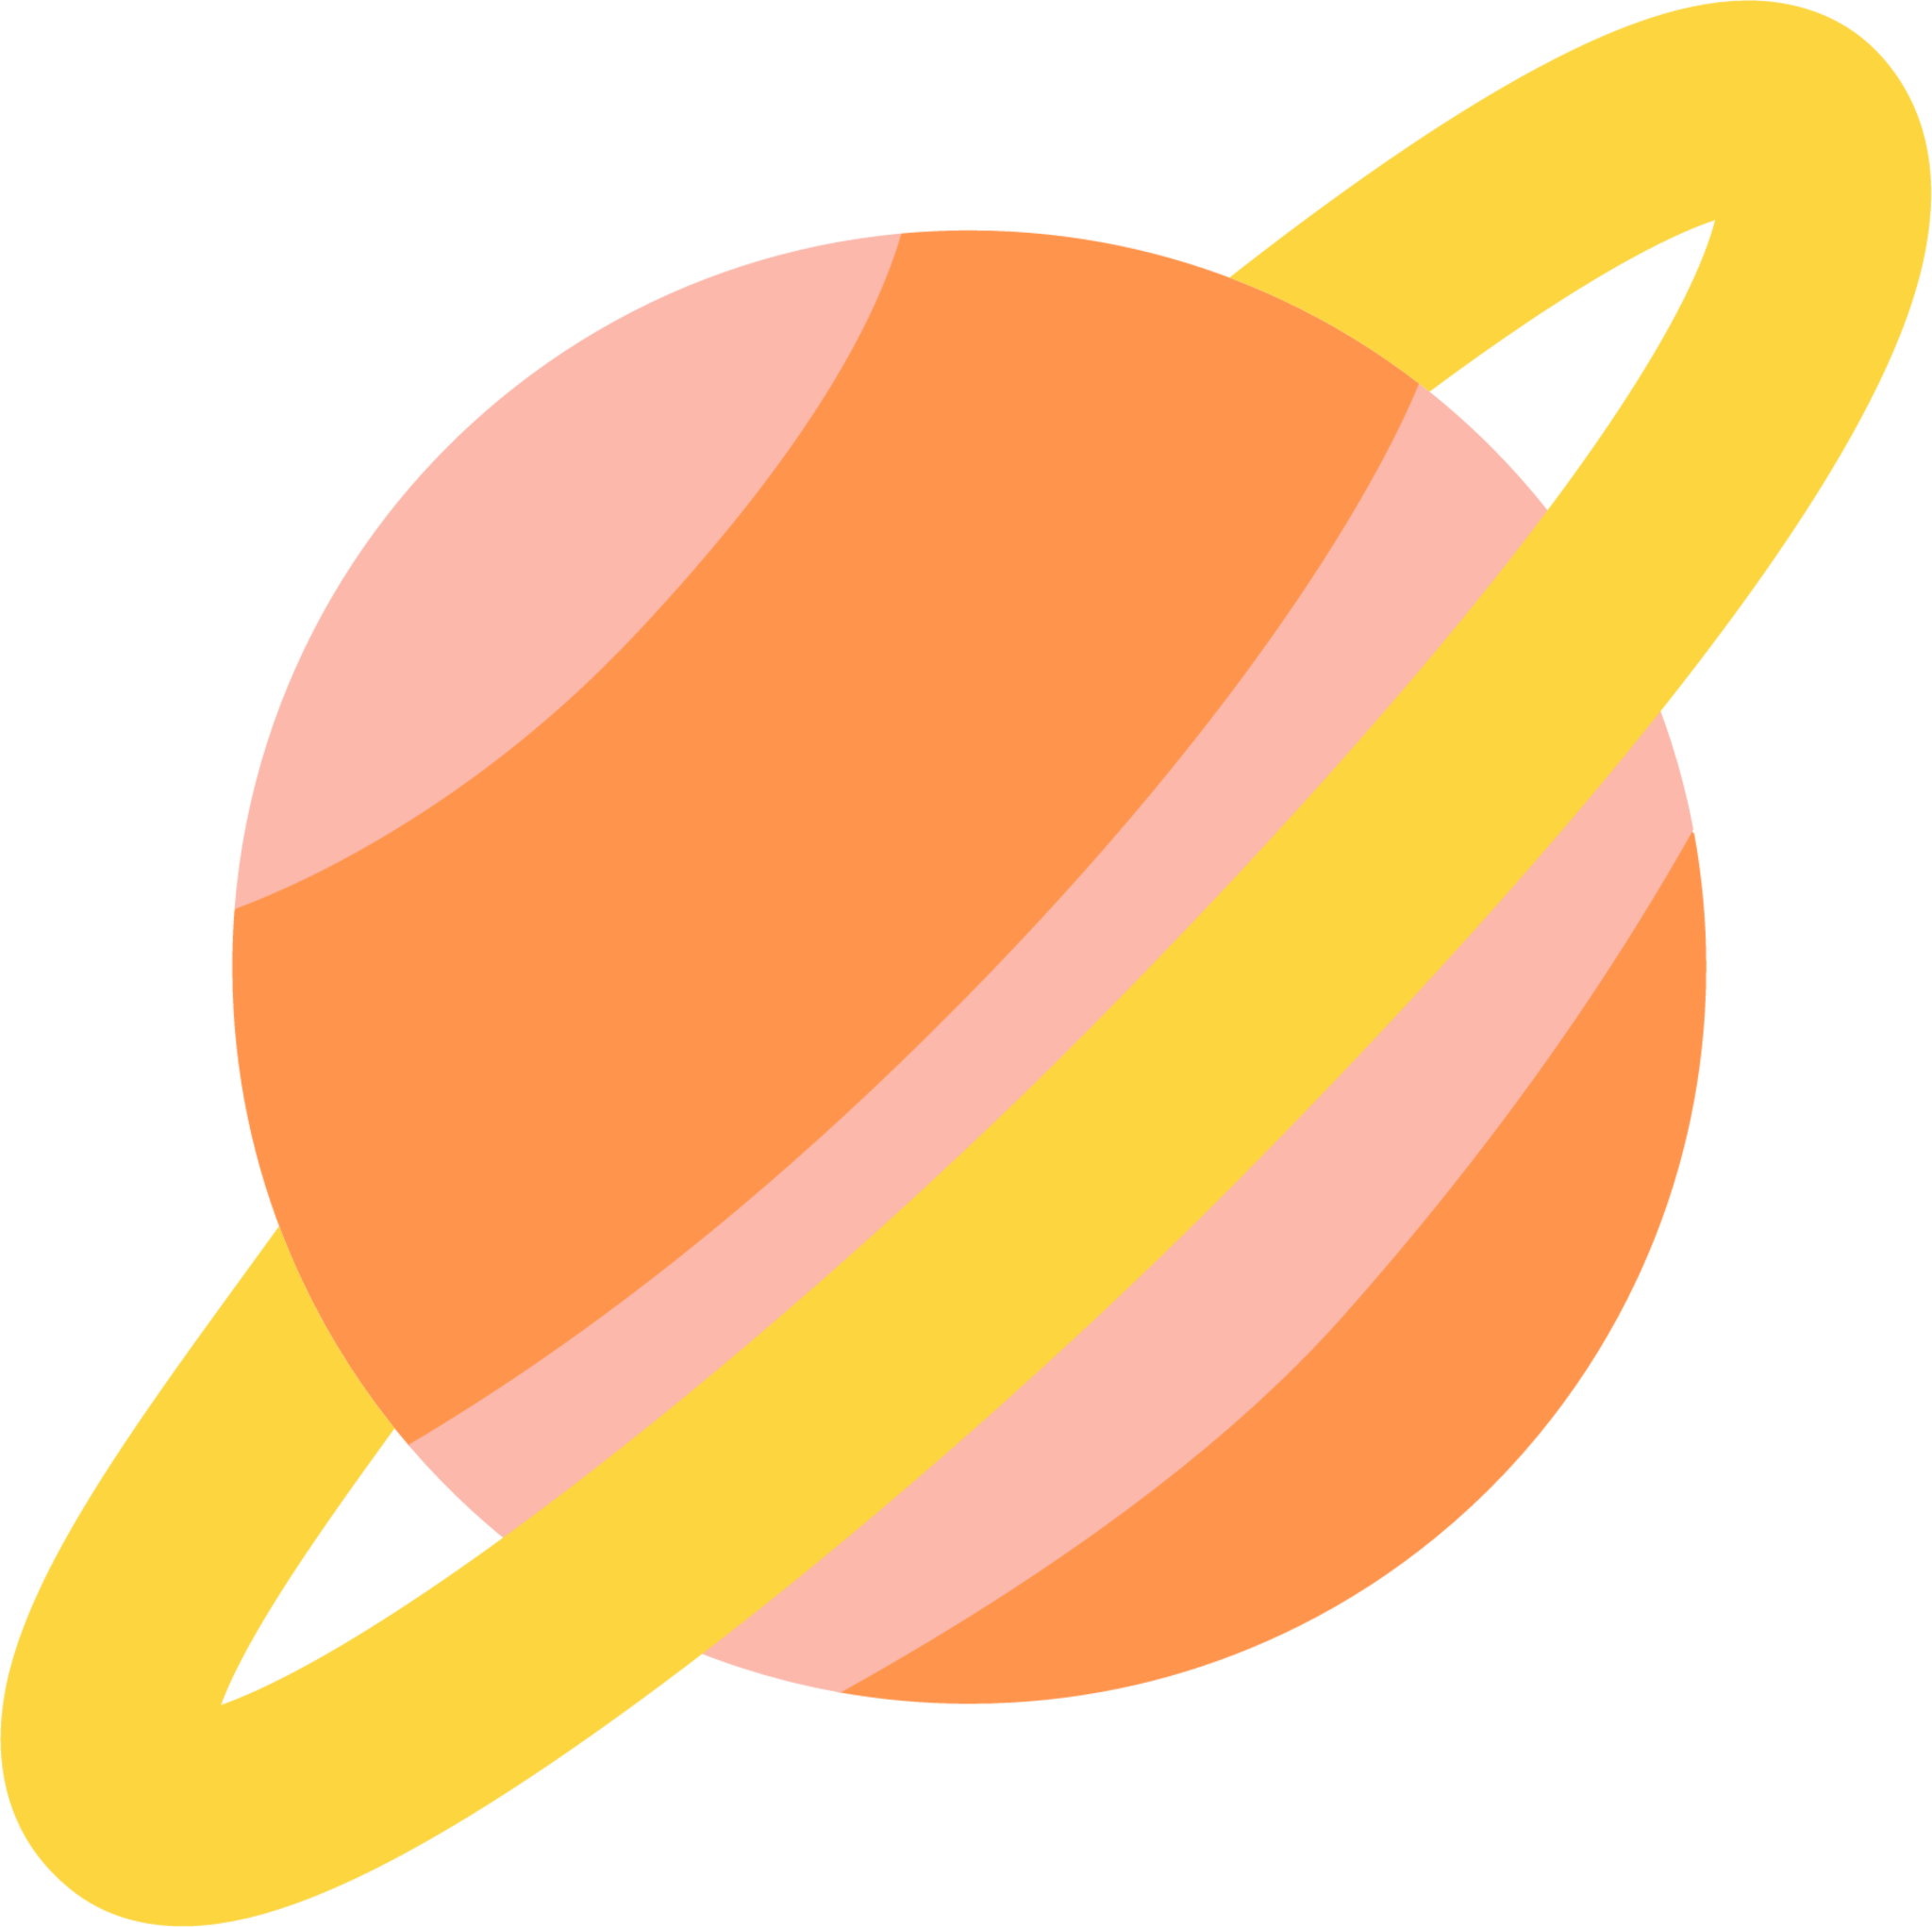 ringed planet emoji